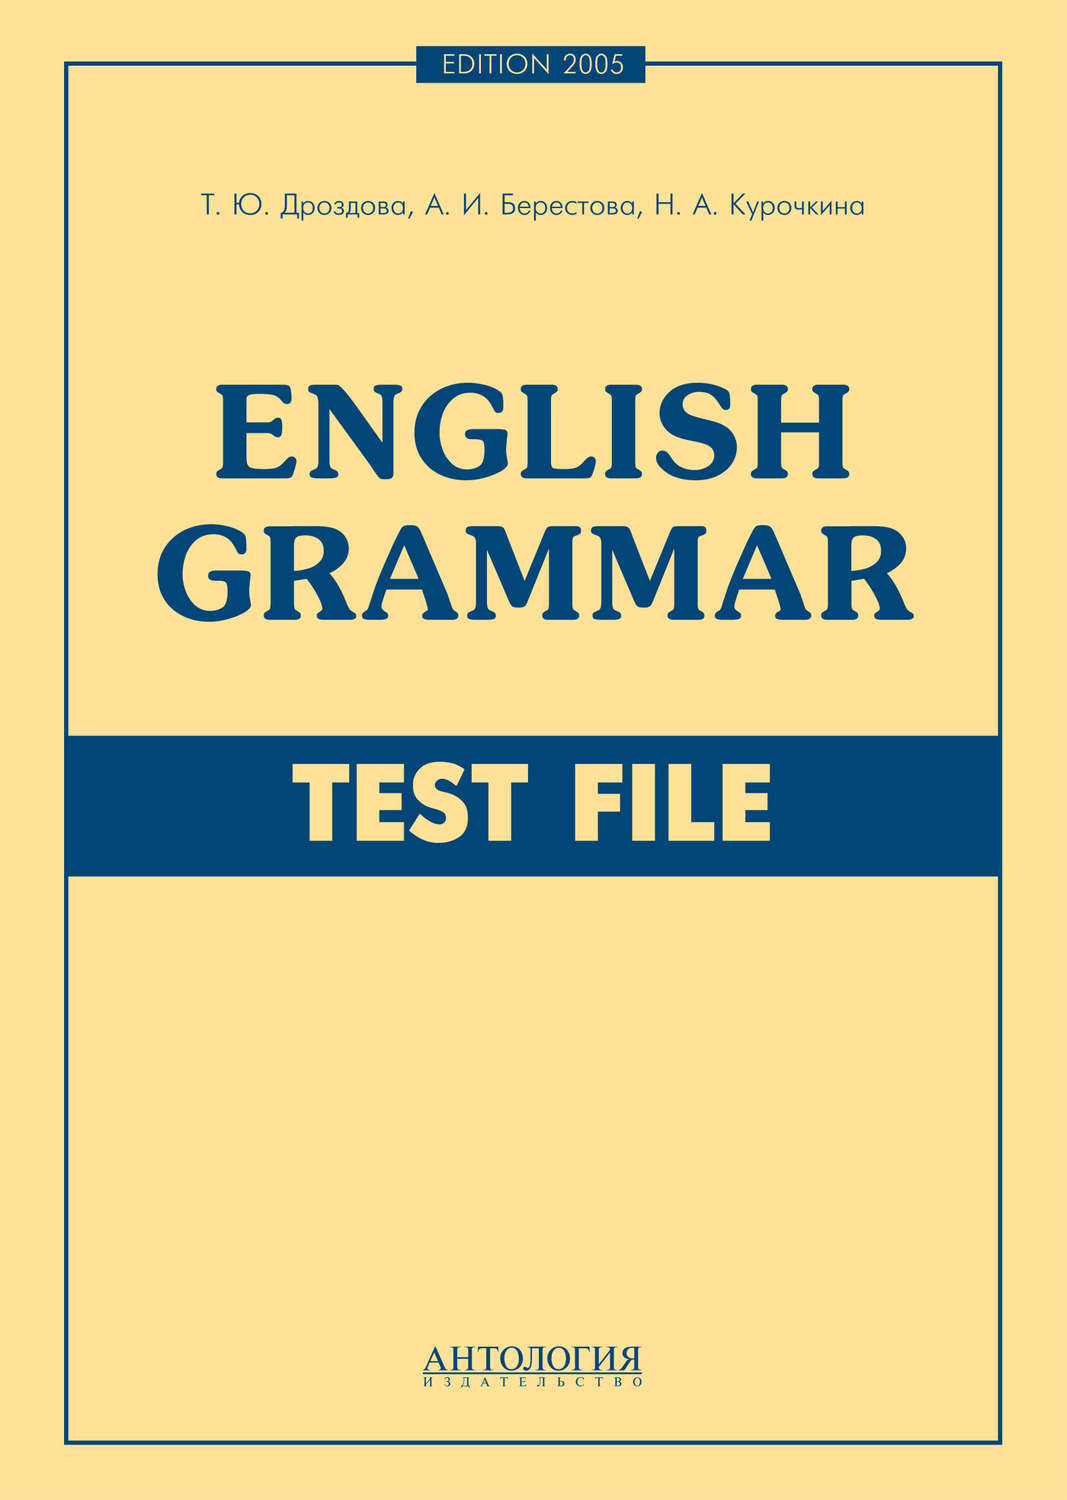 English test book